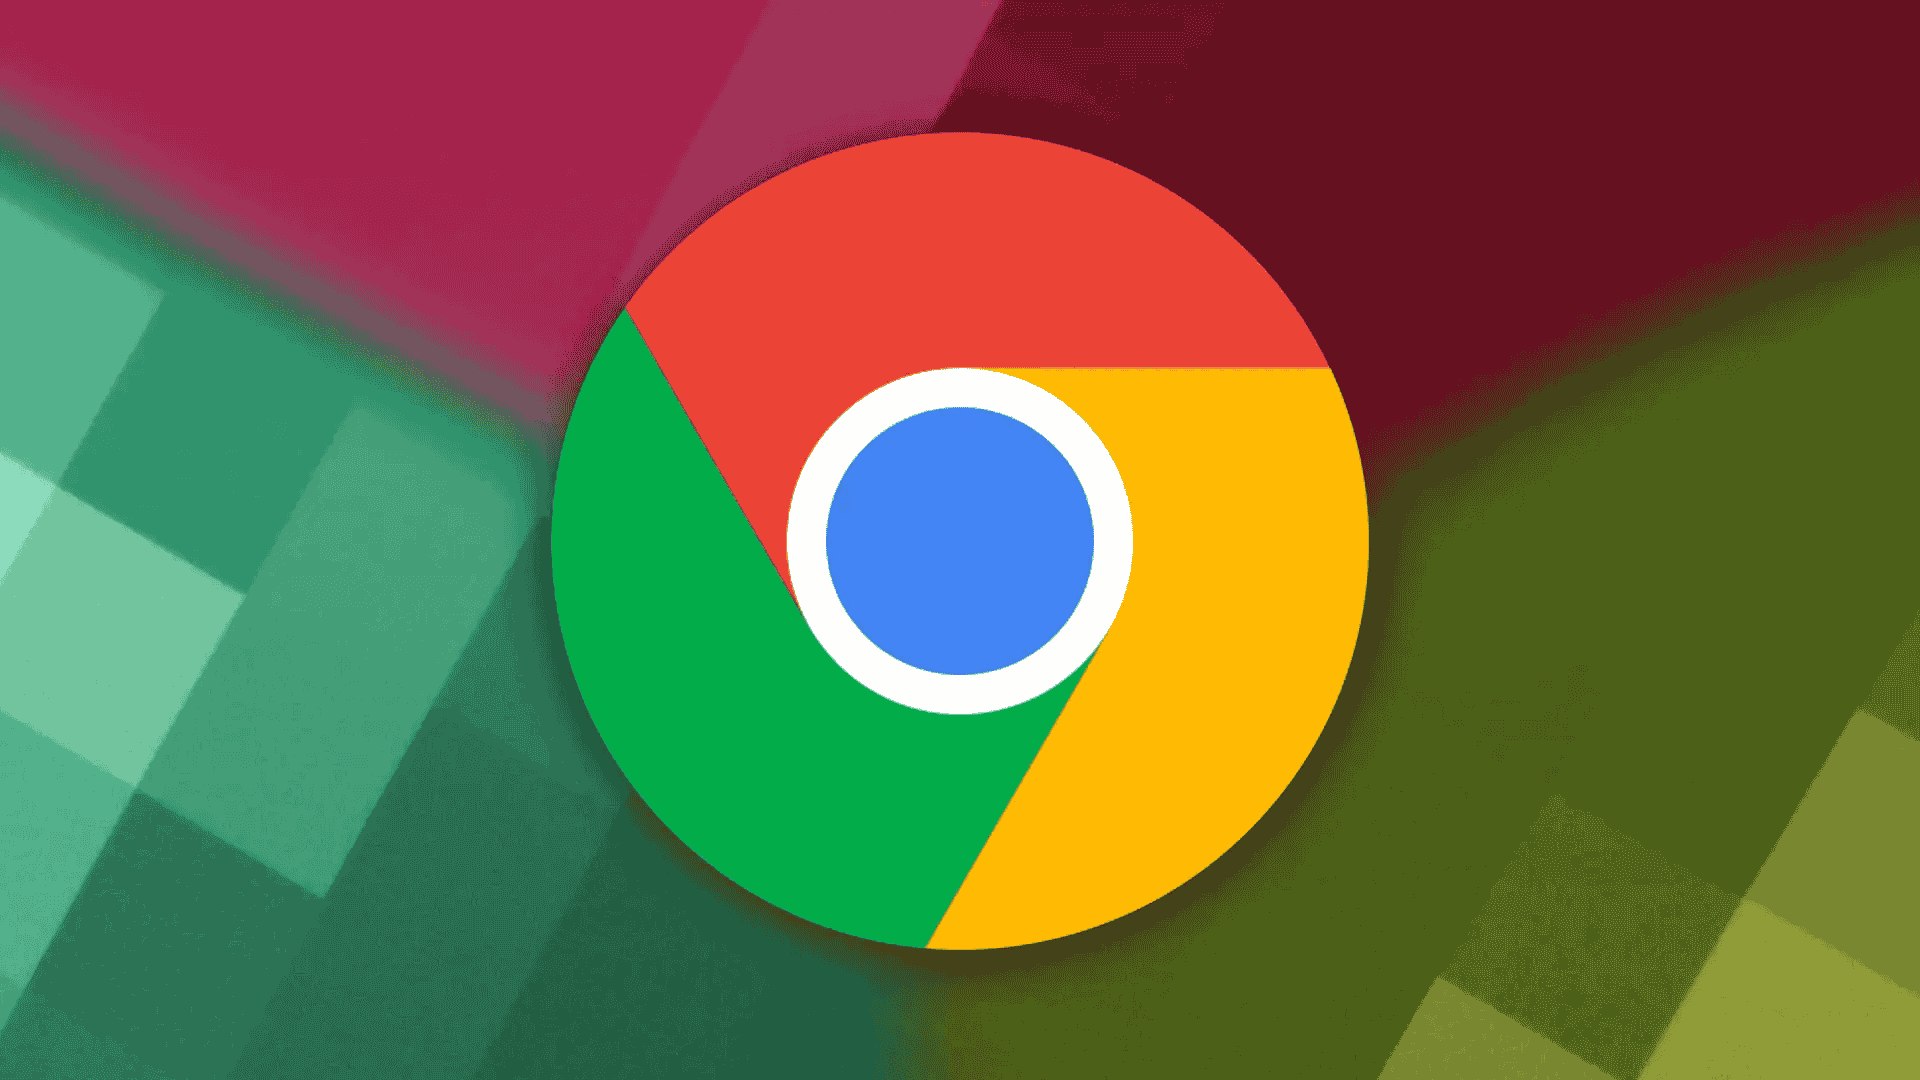 Chorme browser logo.